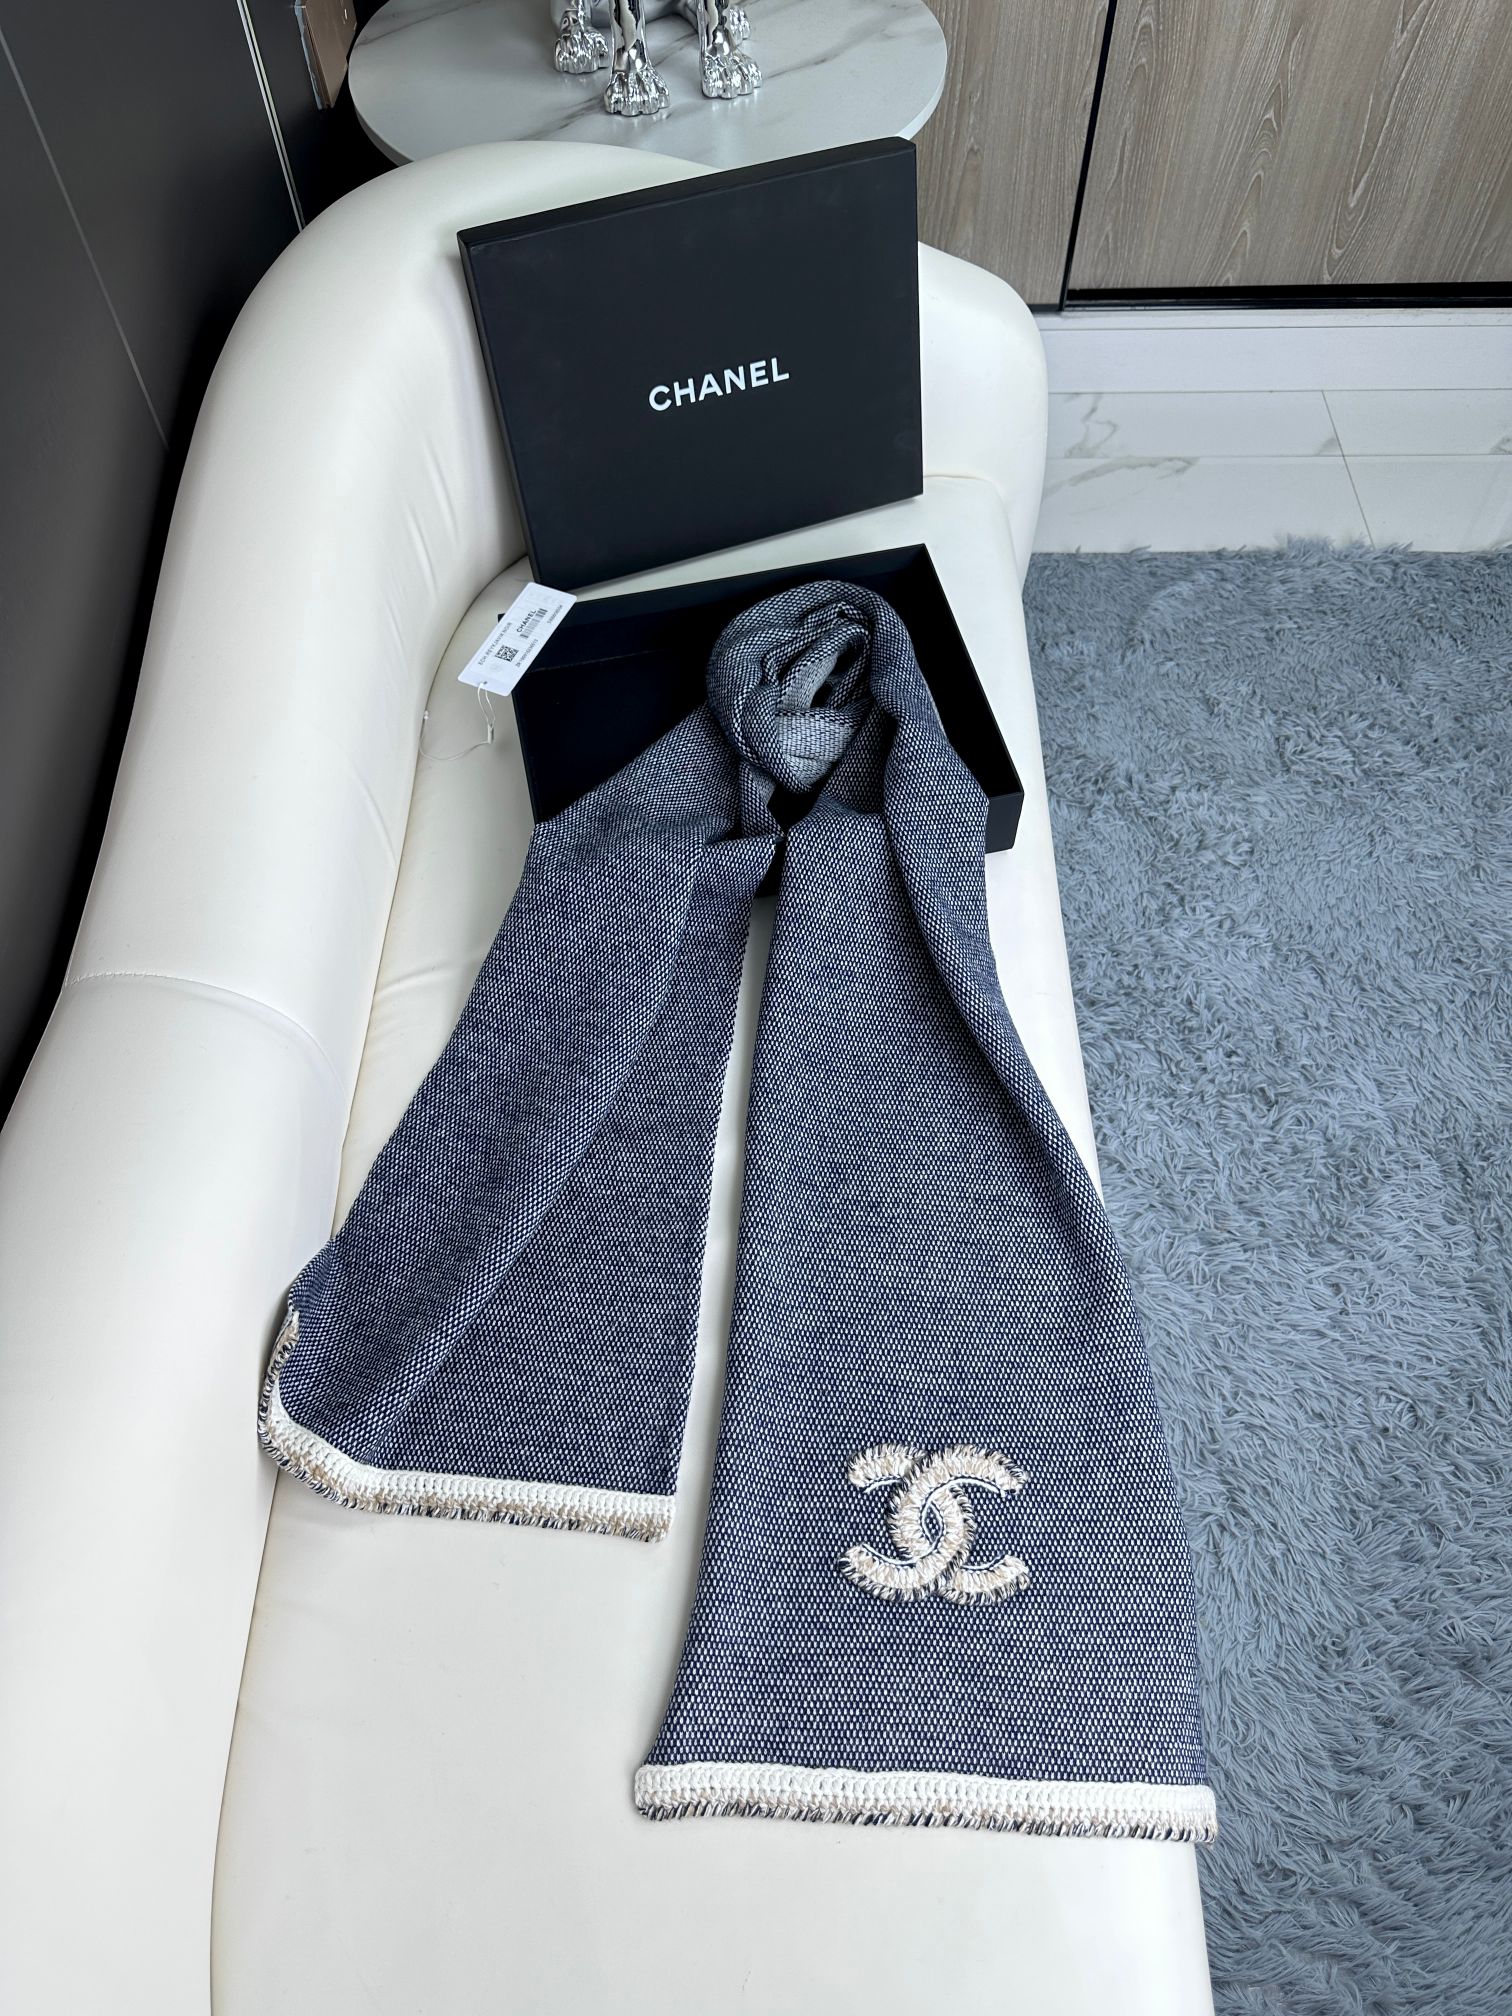 CHANEL2023新品 chanel スカーフ 真贋コピー 暖かい 大判 通勤 旅行 レディース 冷え対策 グレイ_4